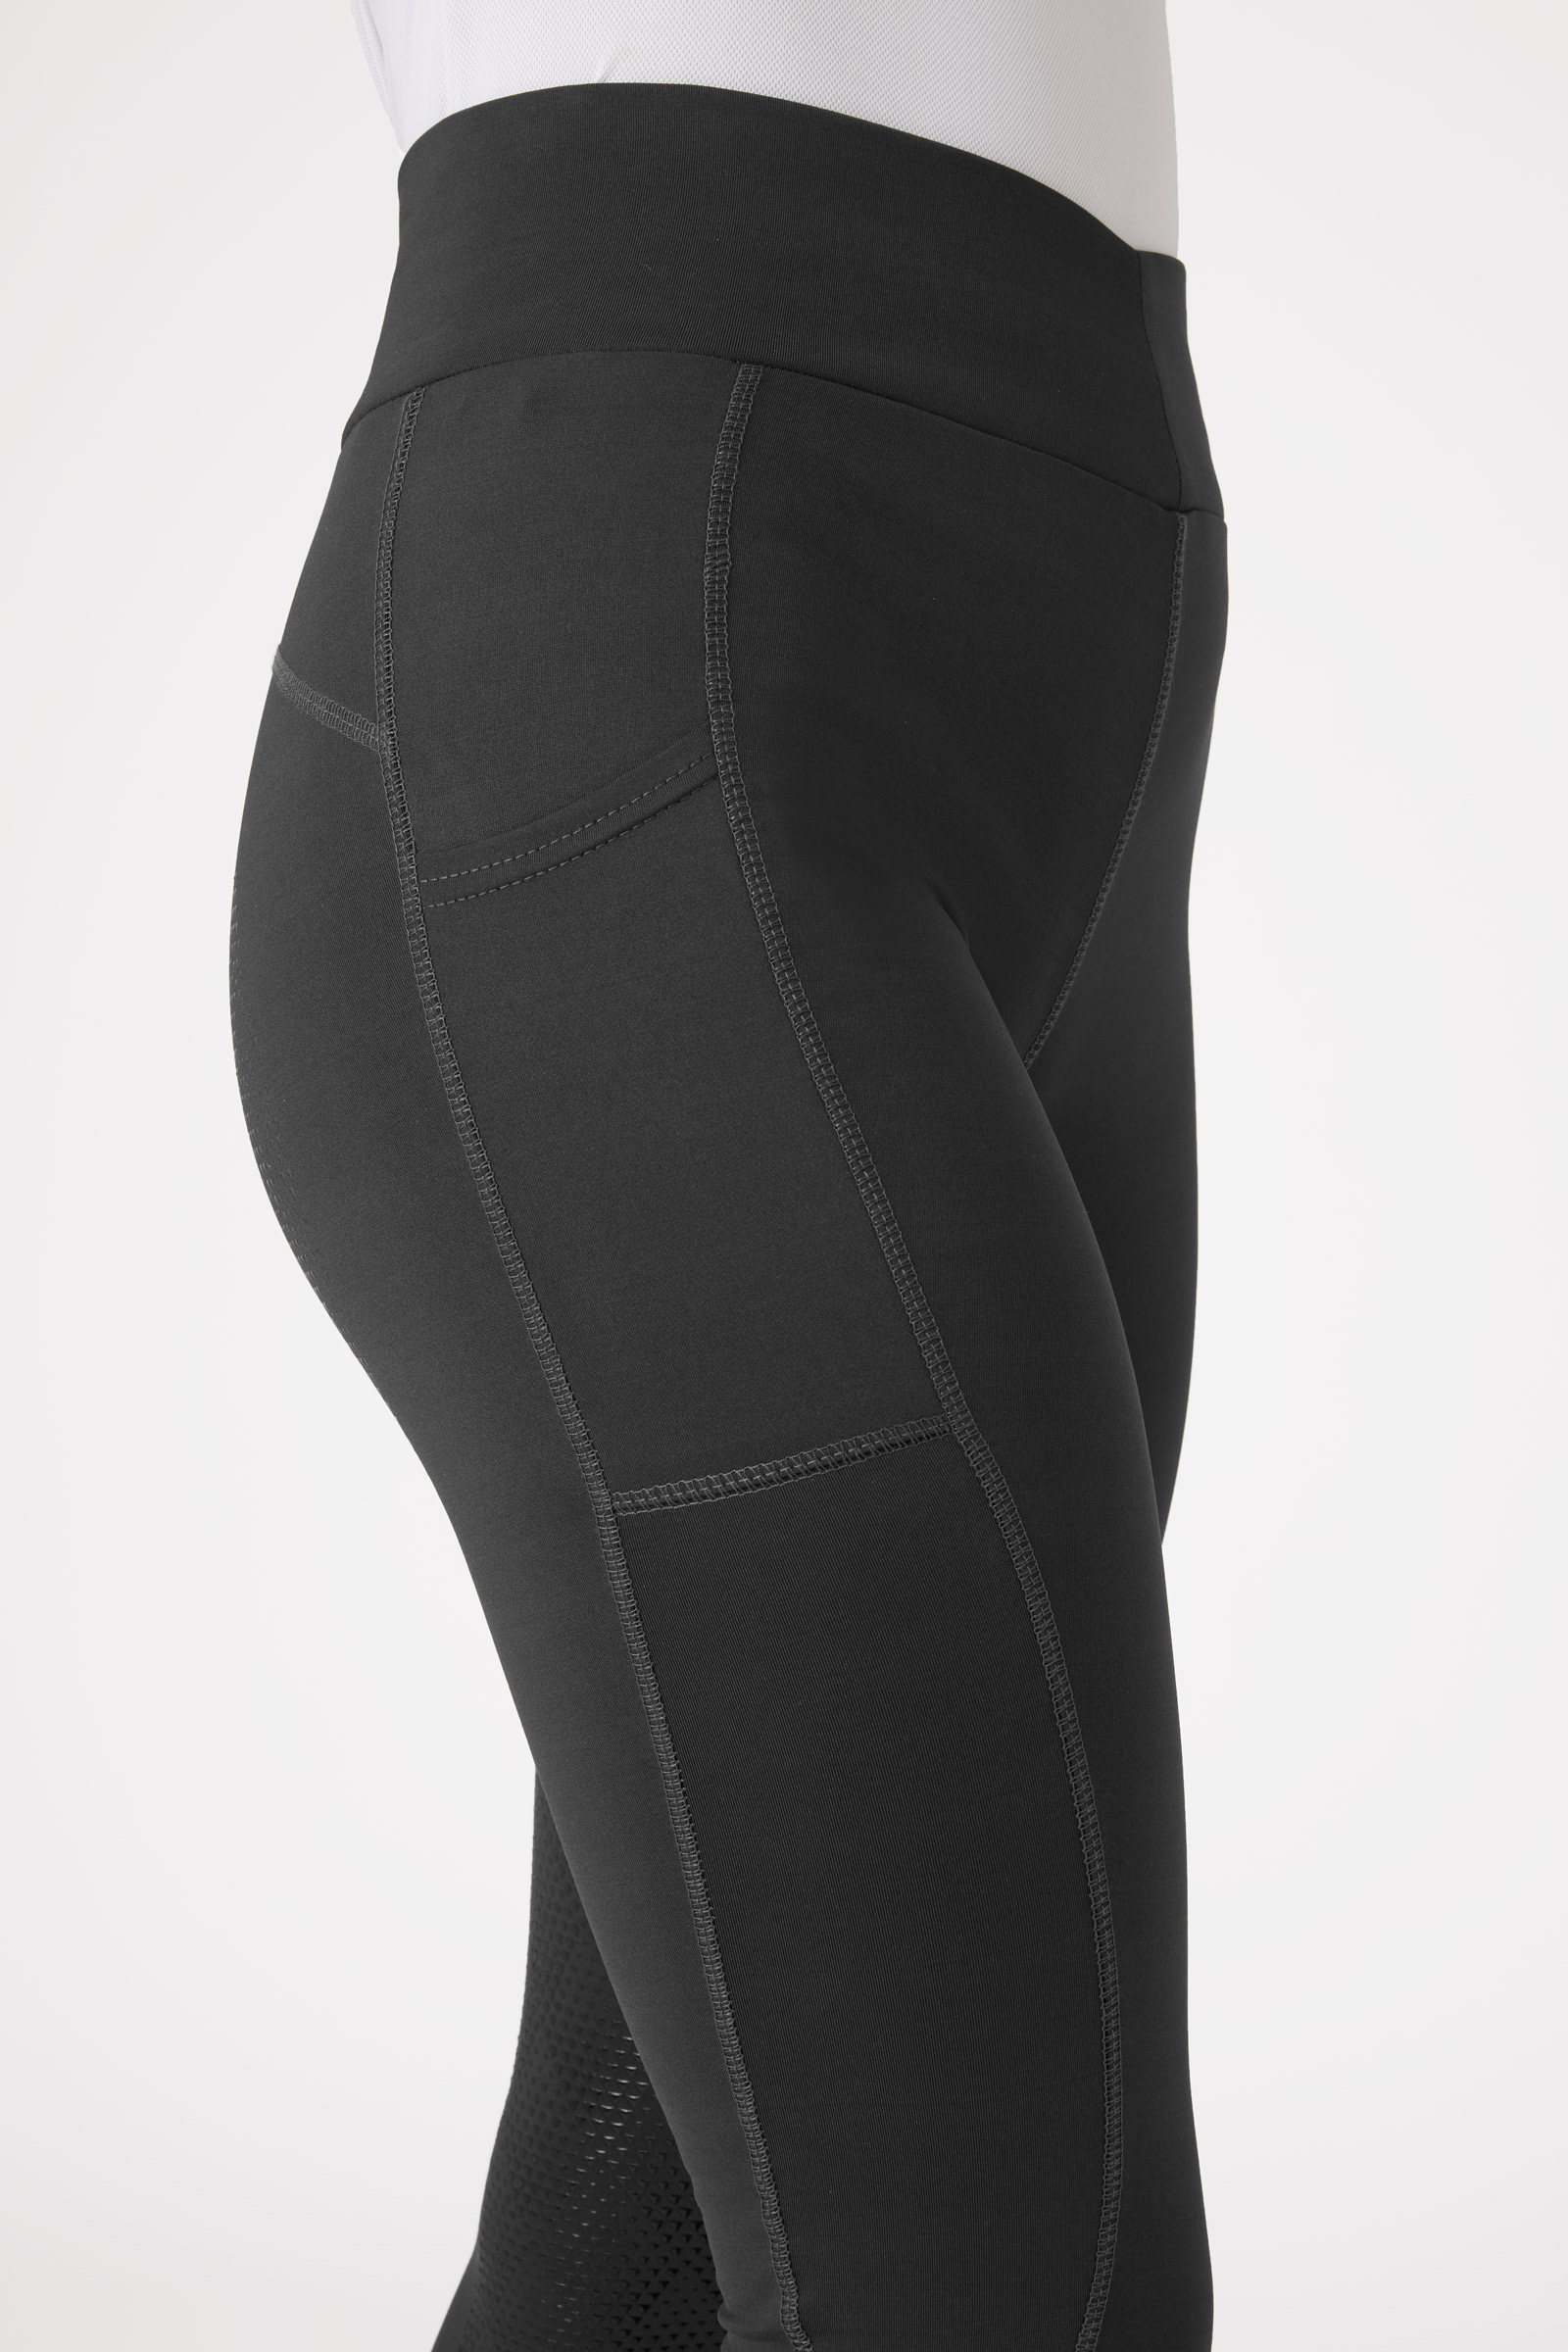 RoAn Dancewear ] Stealth solid black high waisted yoga leggings